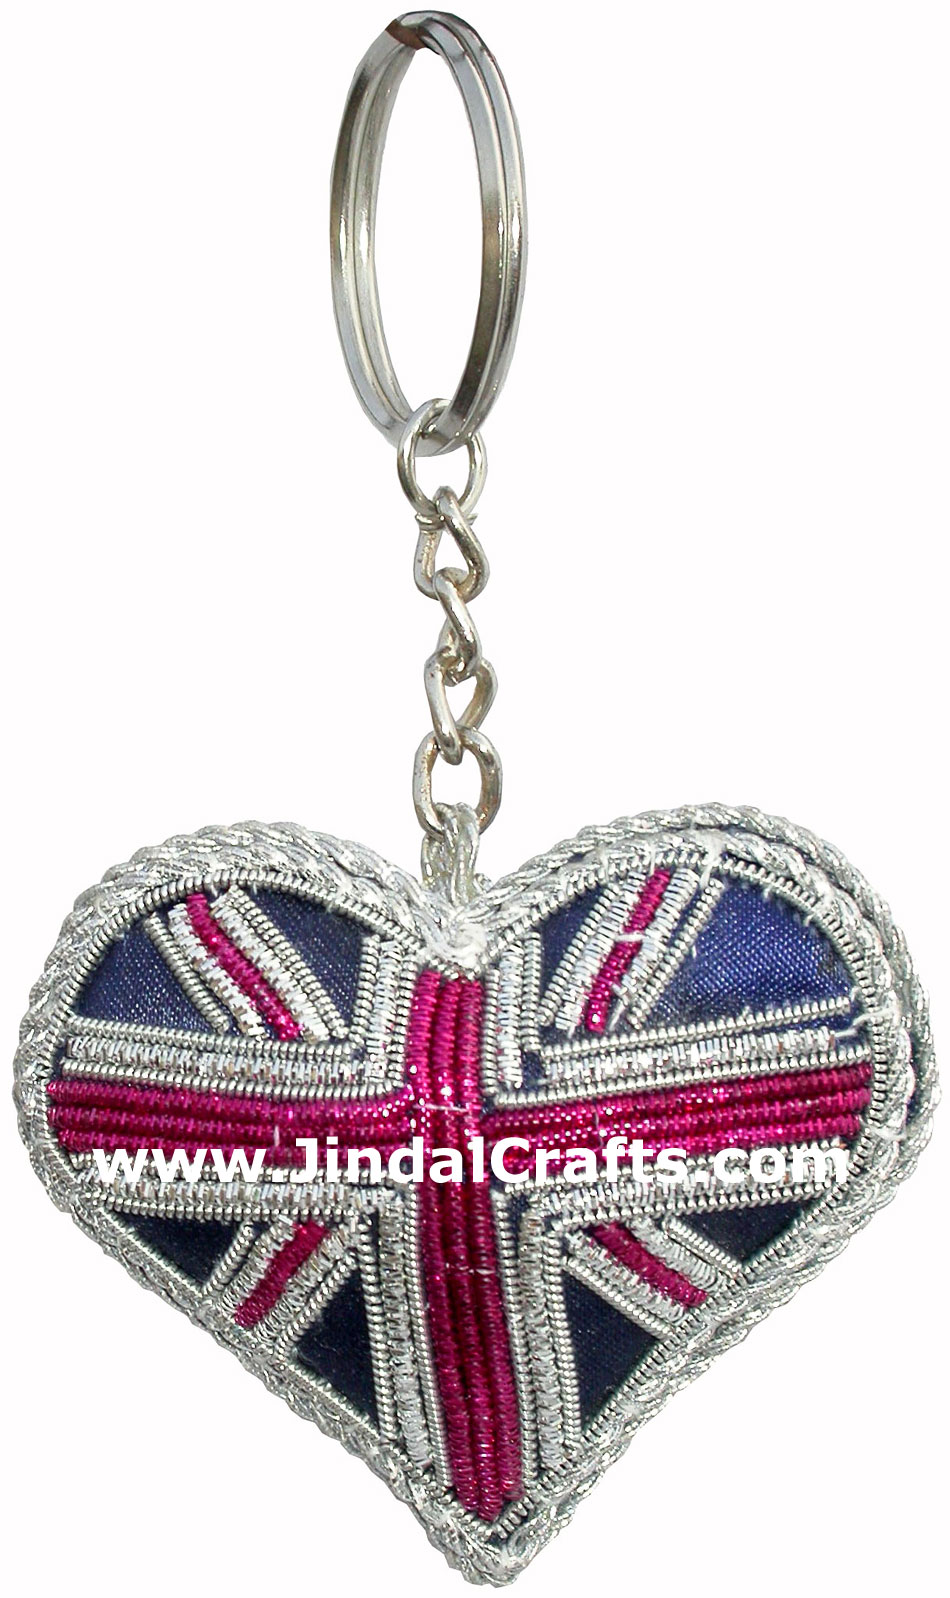 Great Britain Keyring - Handmade from India